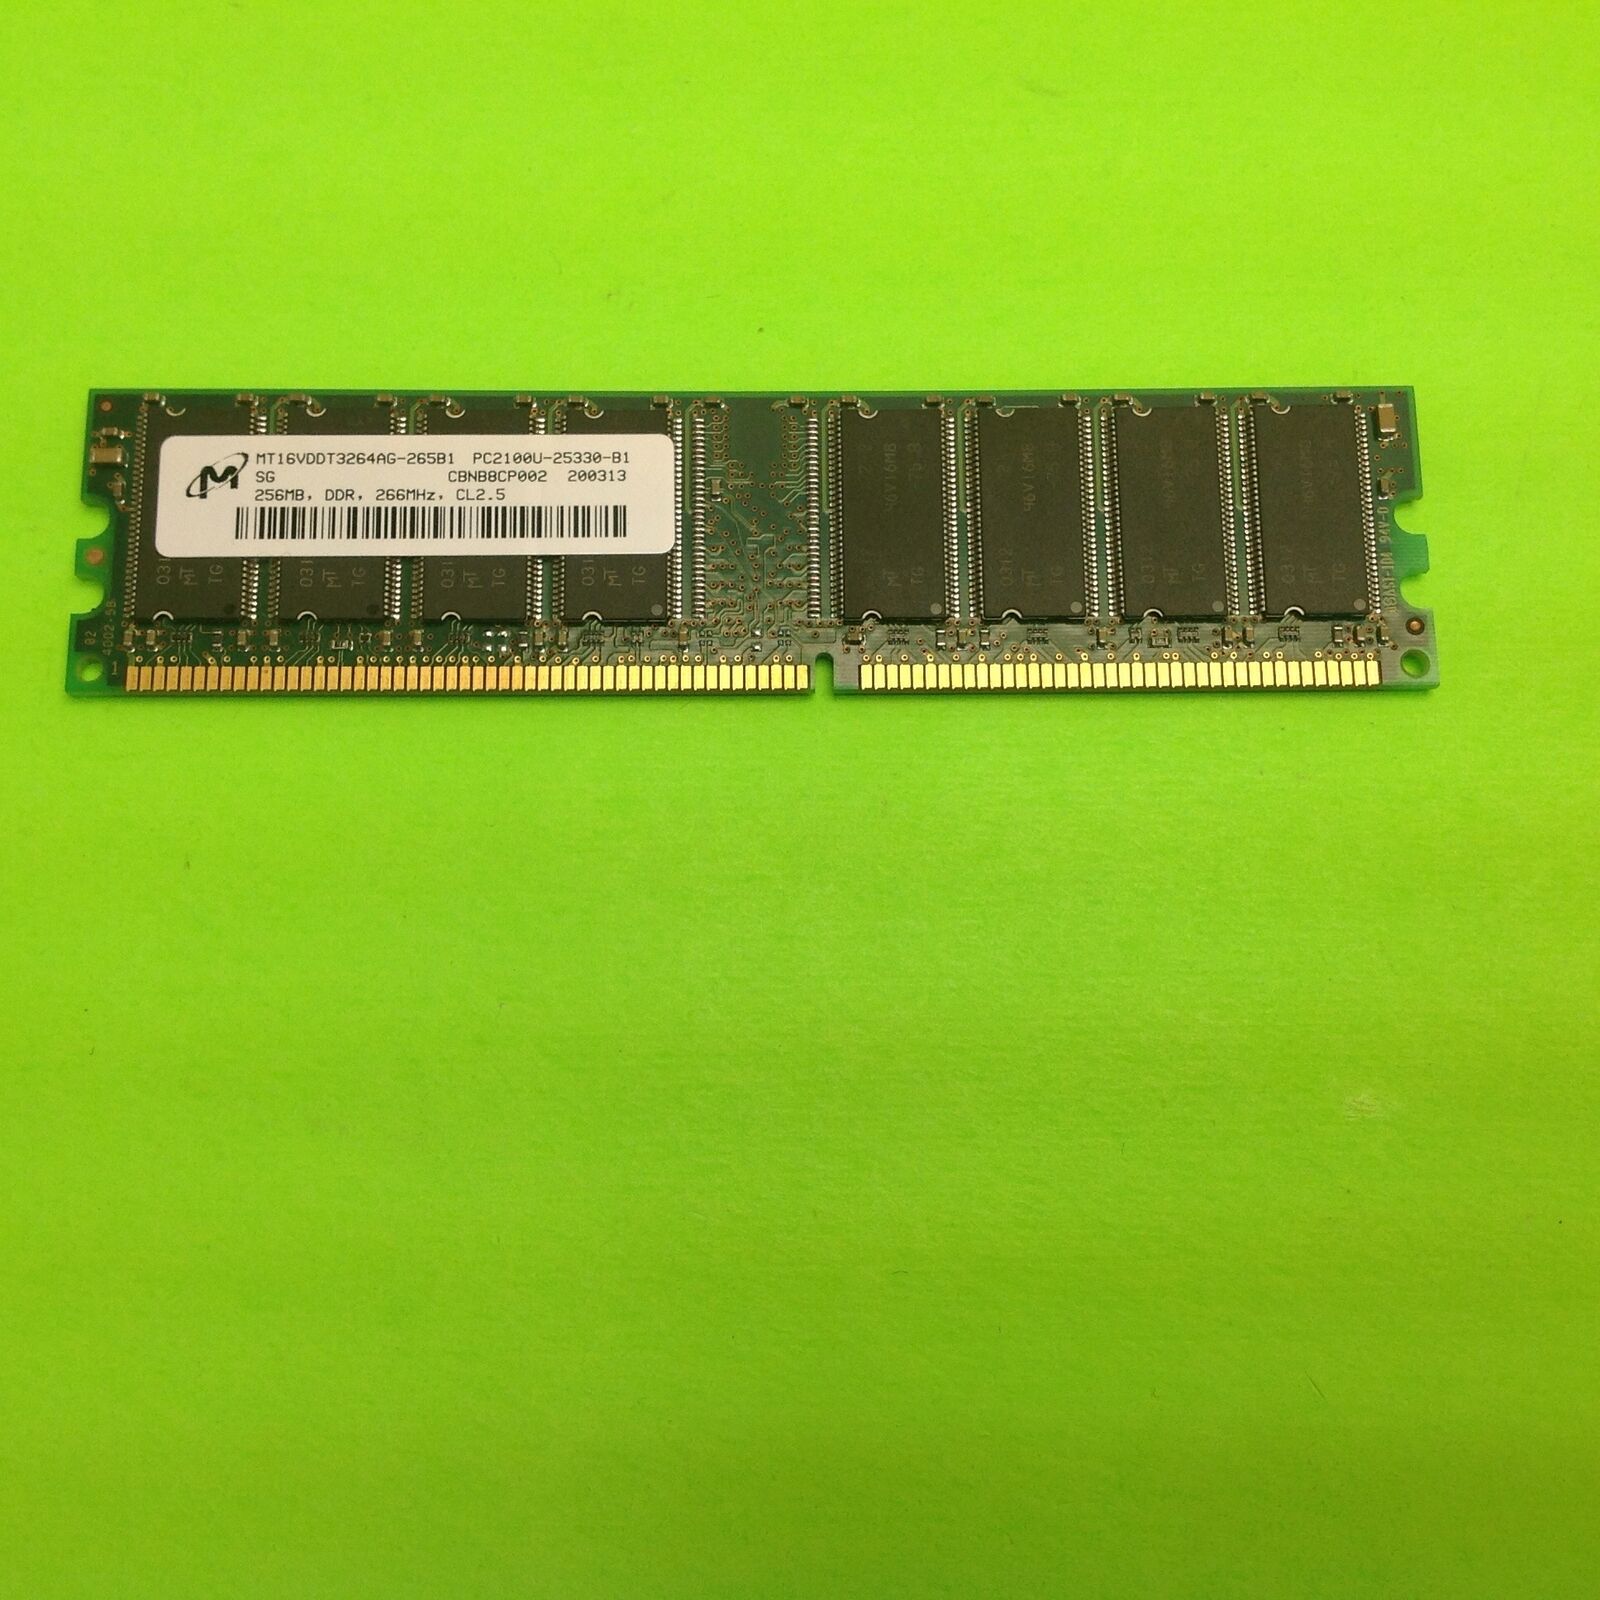 Micron MT16VDDT3264AG-265B1 256MB DDR-266 (PC-2100) PC-2100U RAM Memory